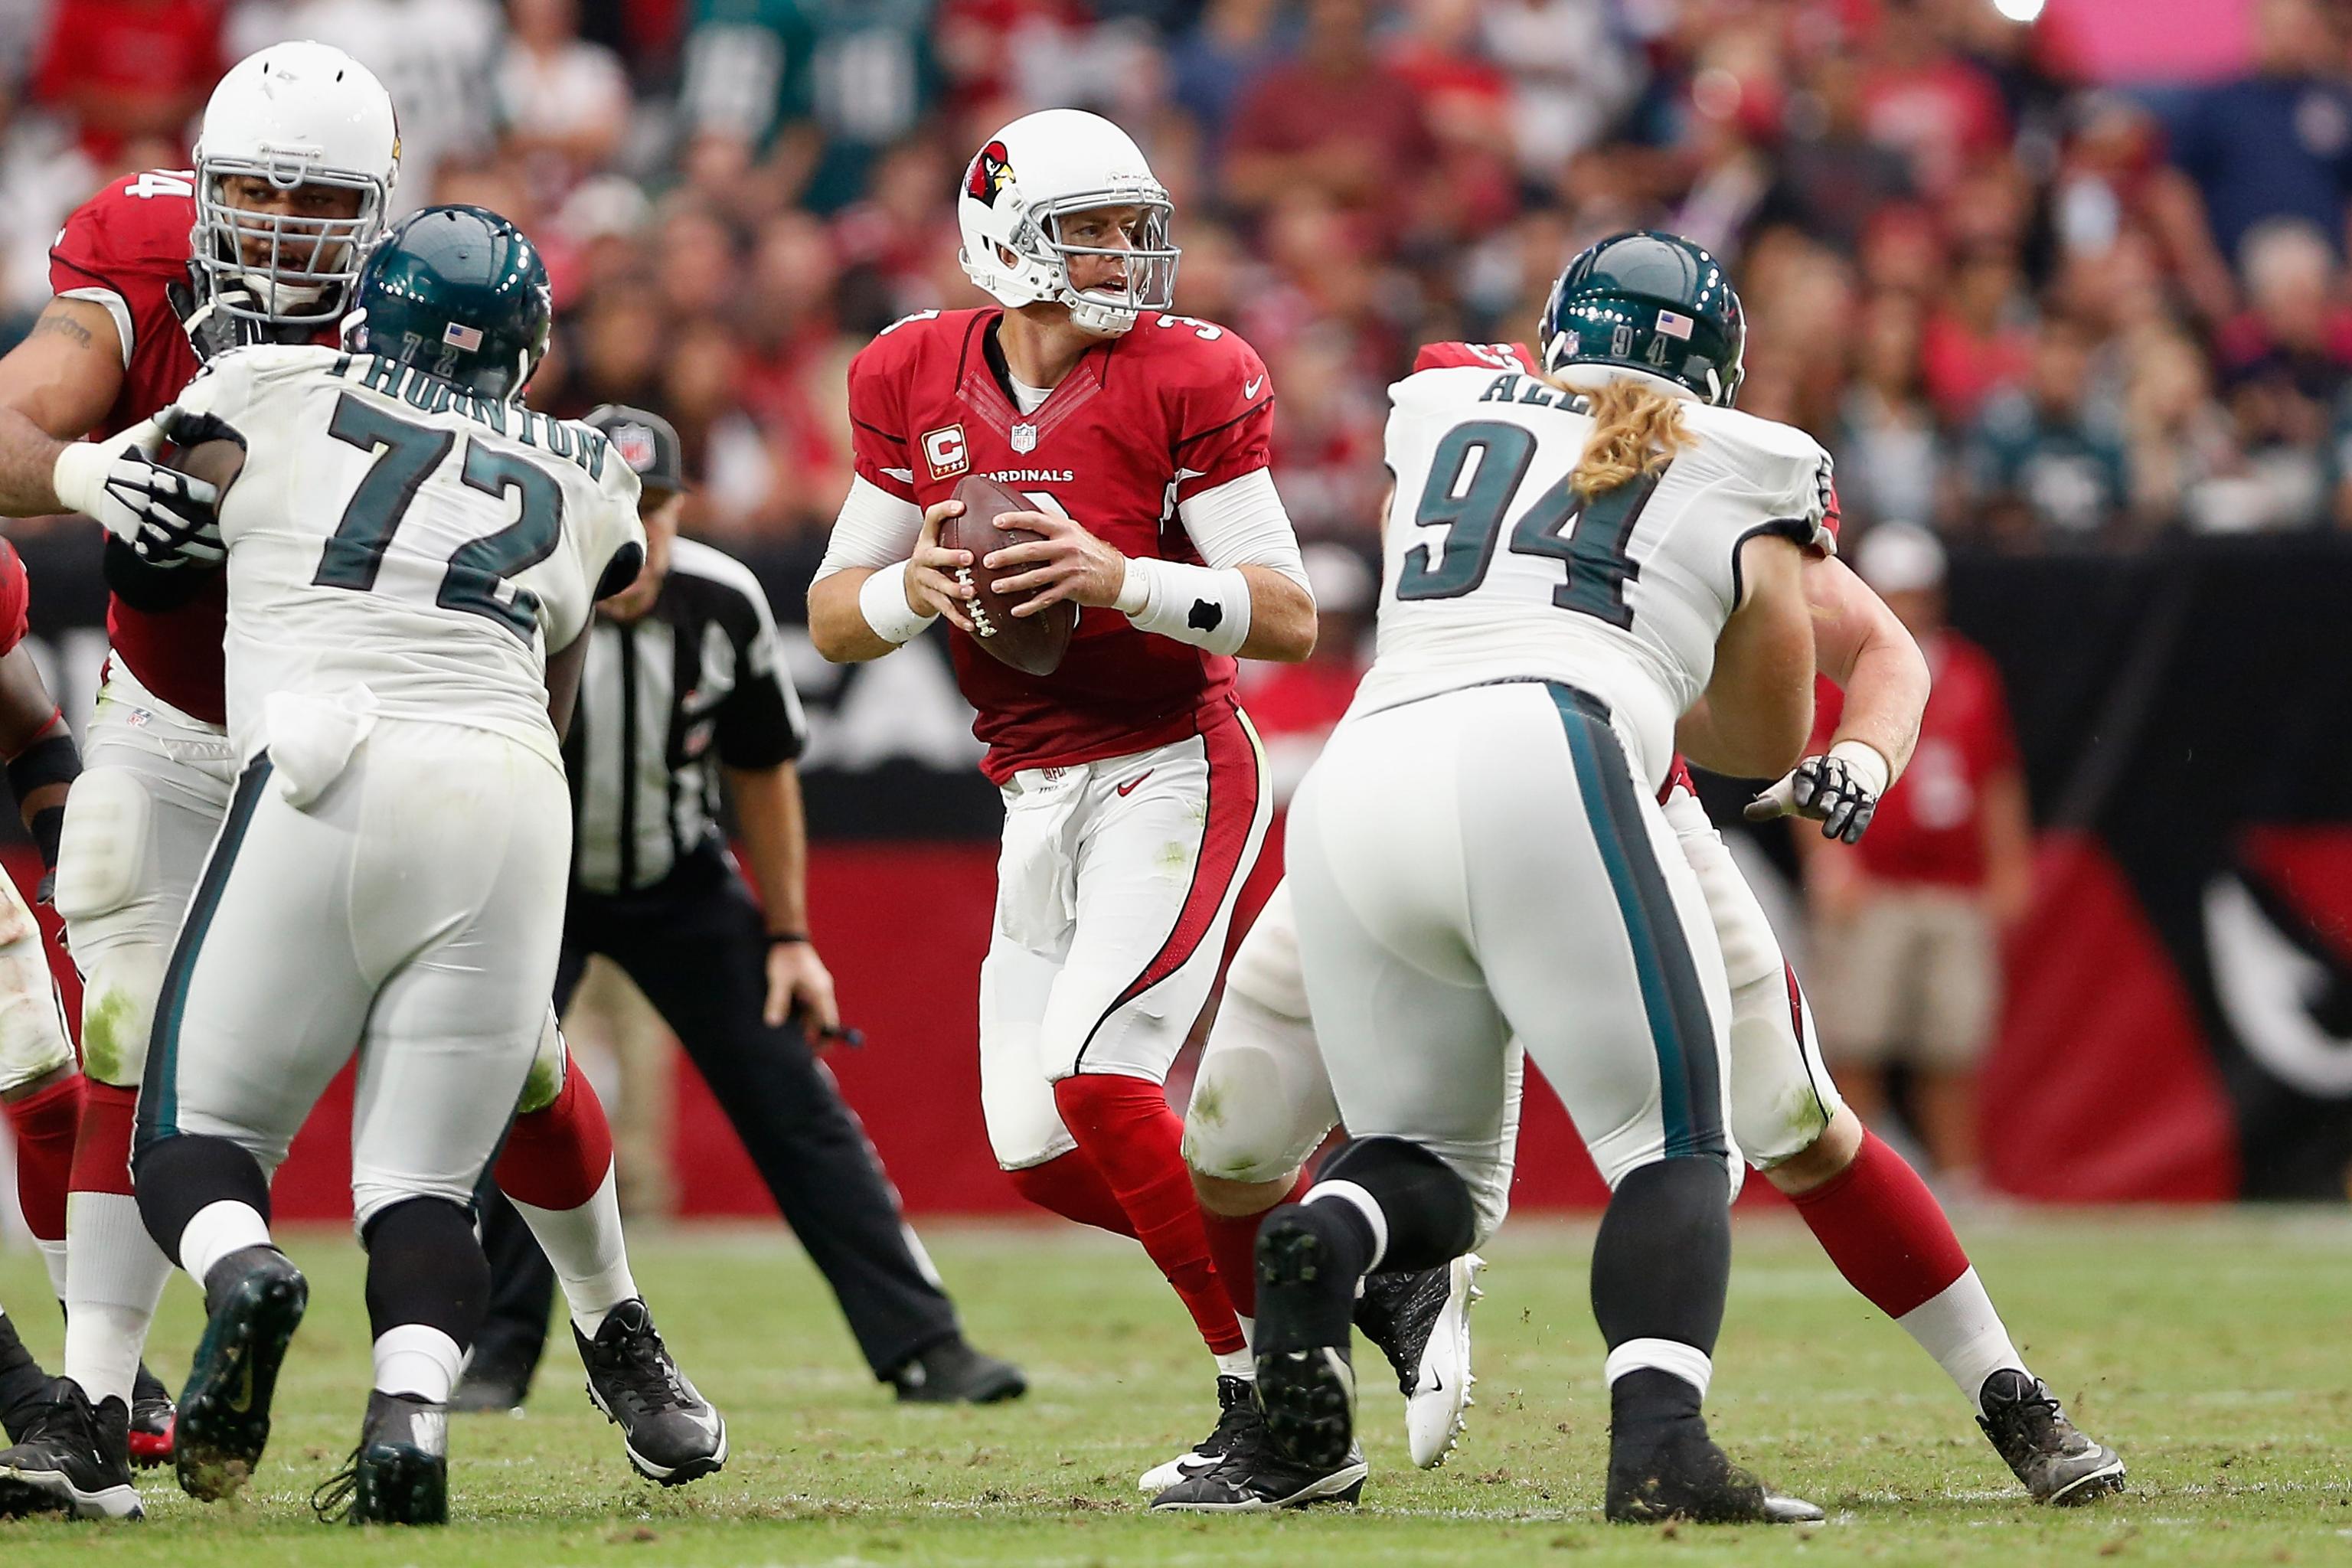 Eagles vs. Cardinals Week 15 game flexed to Sunday Night Football